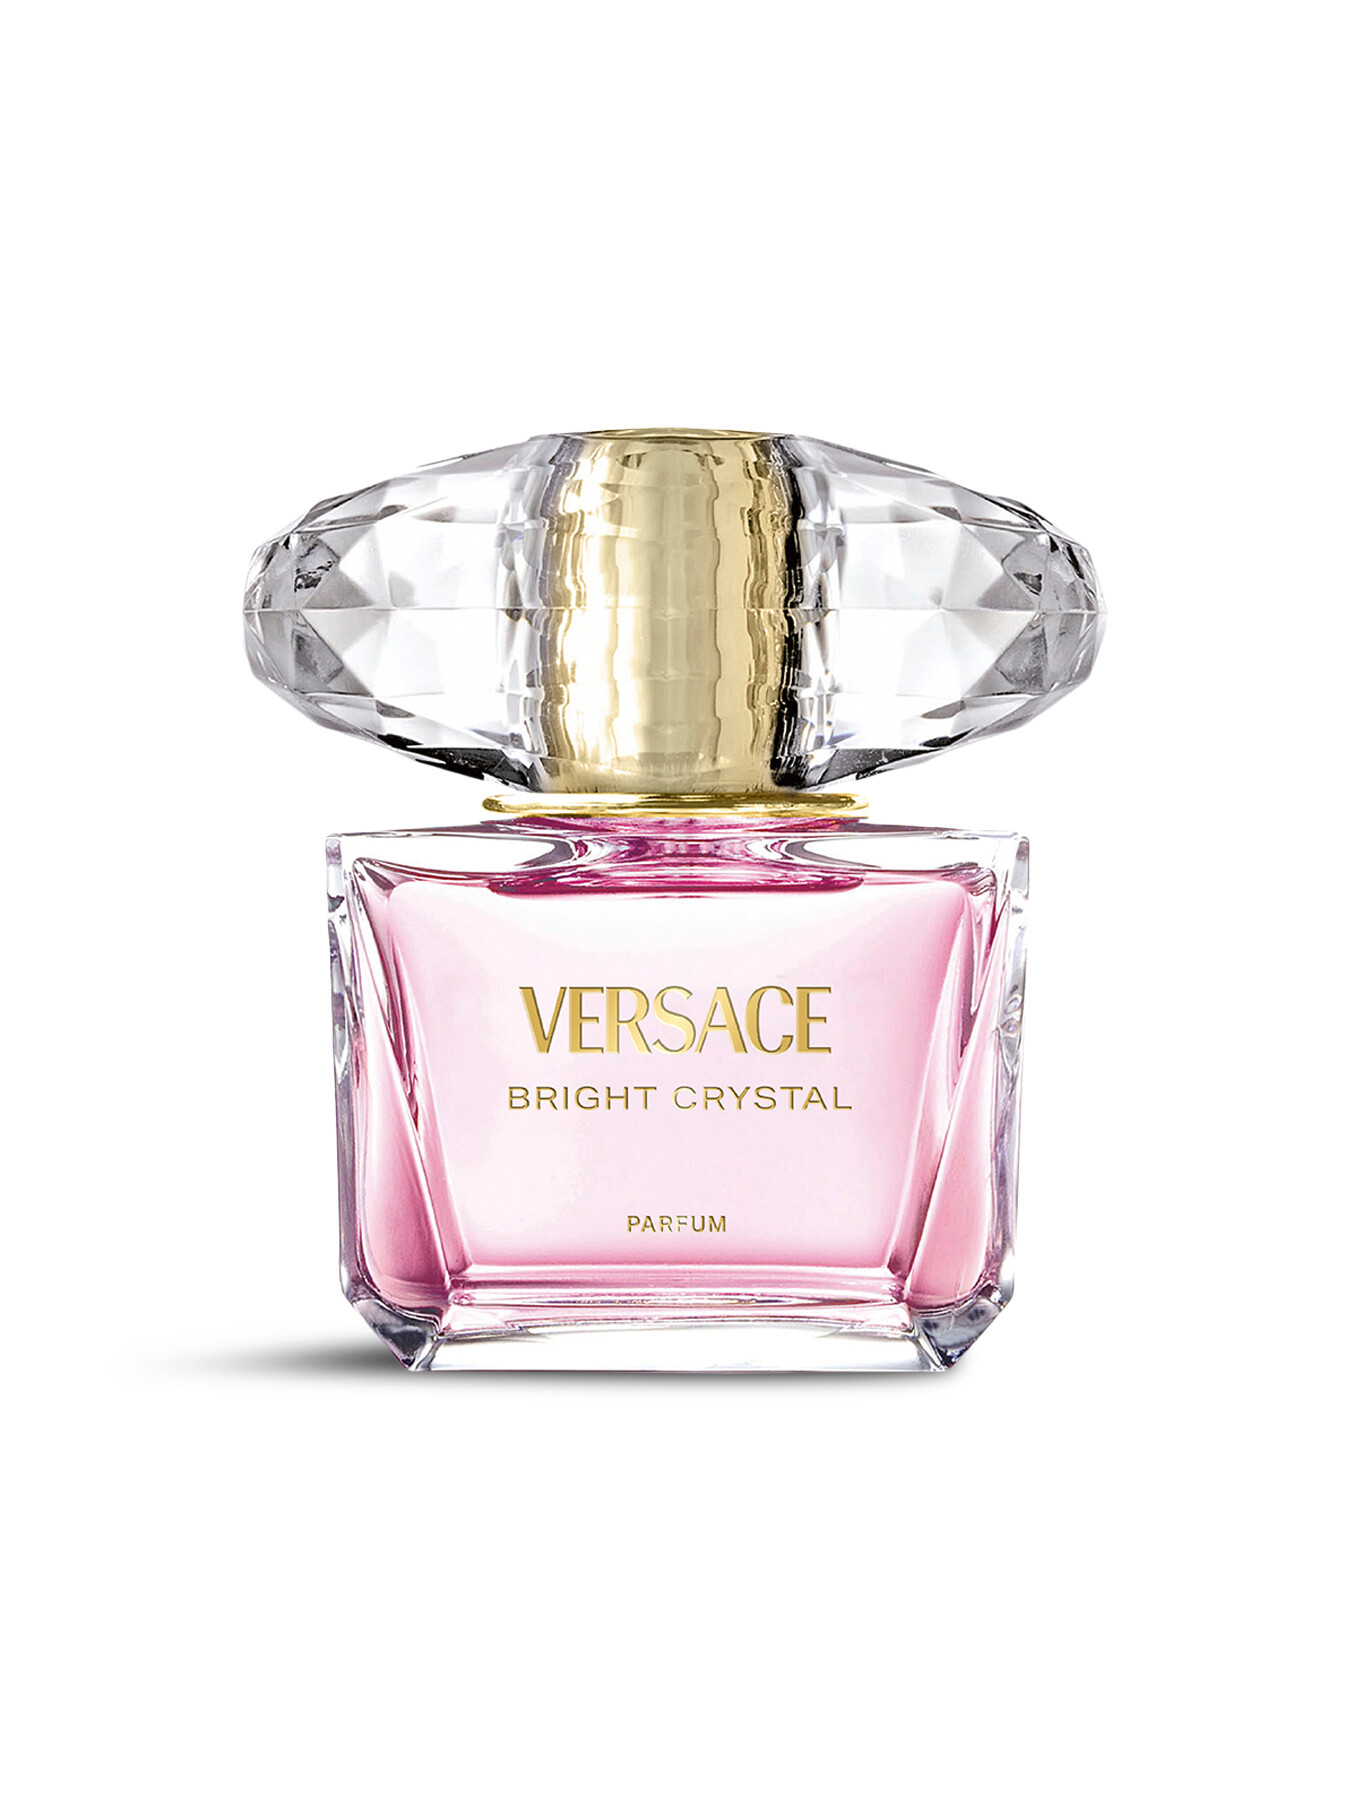 Versace Bright Crystal Parfum 90ml In White